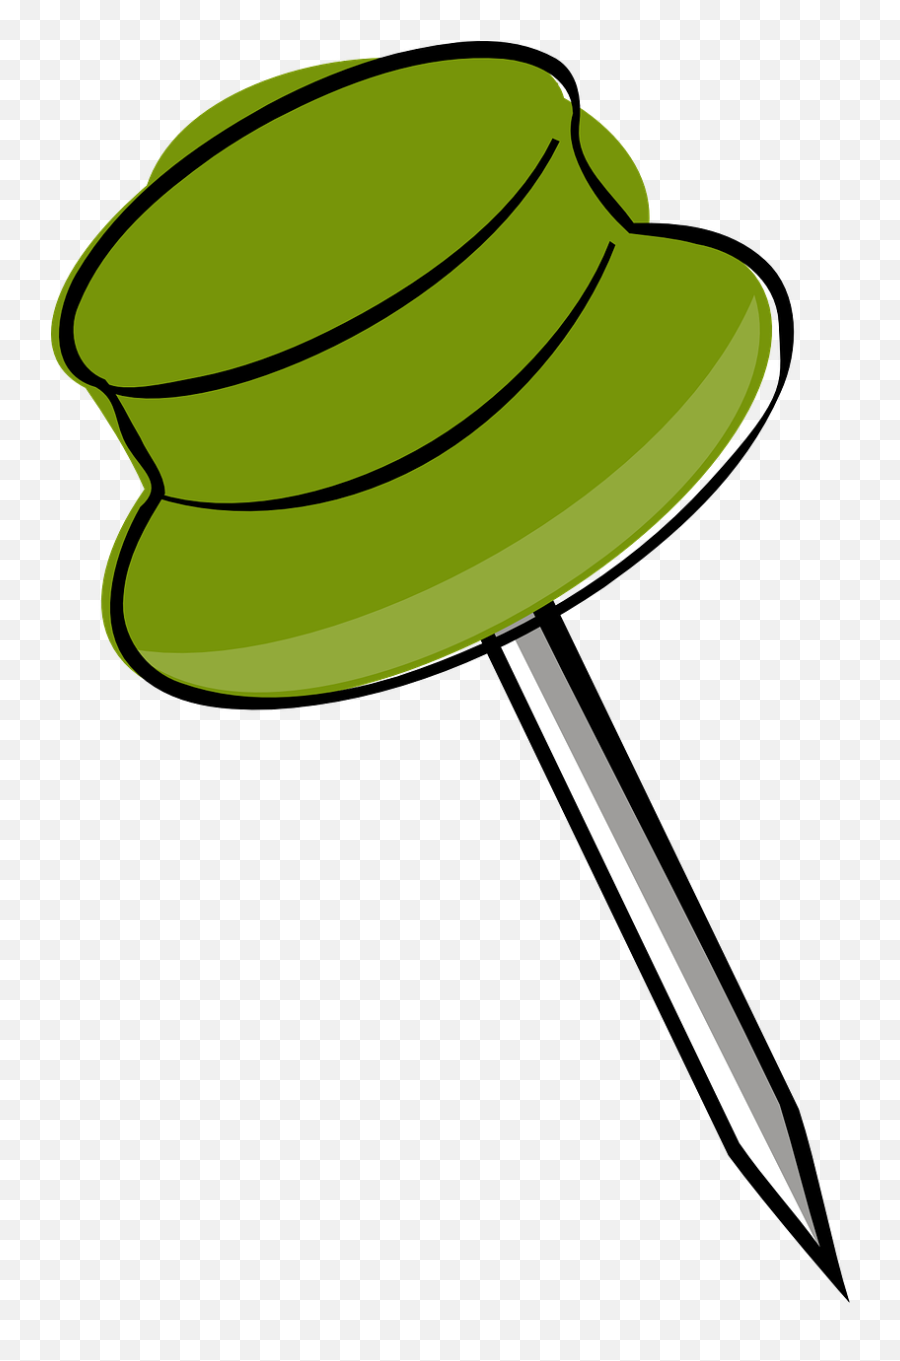 Drawing - Pin Pushpin Push Pin Free Vector Graphic On Pixabay Png,Pushpin Icon Free